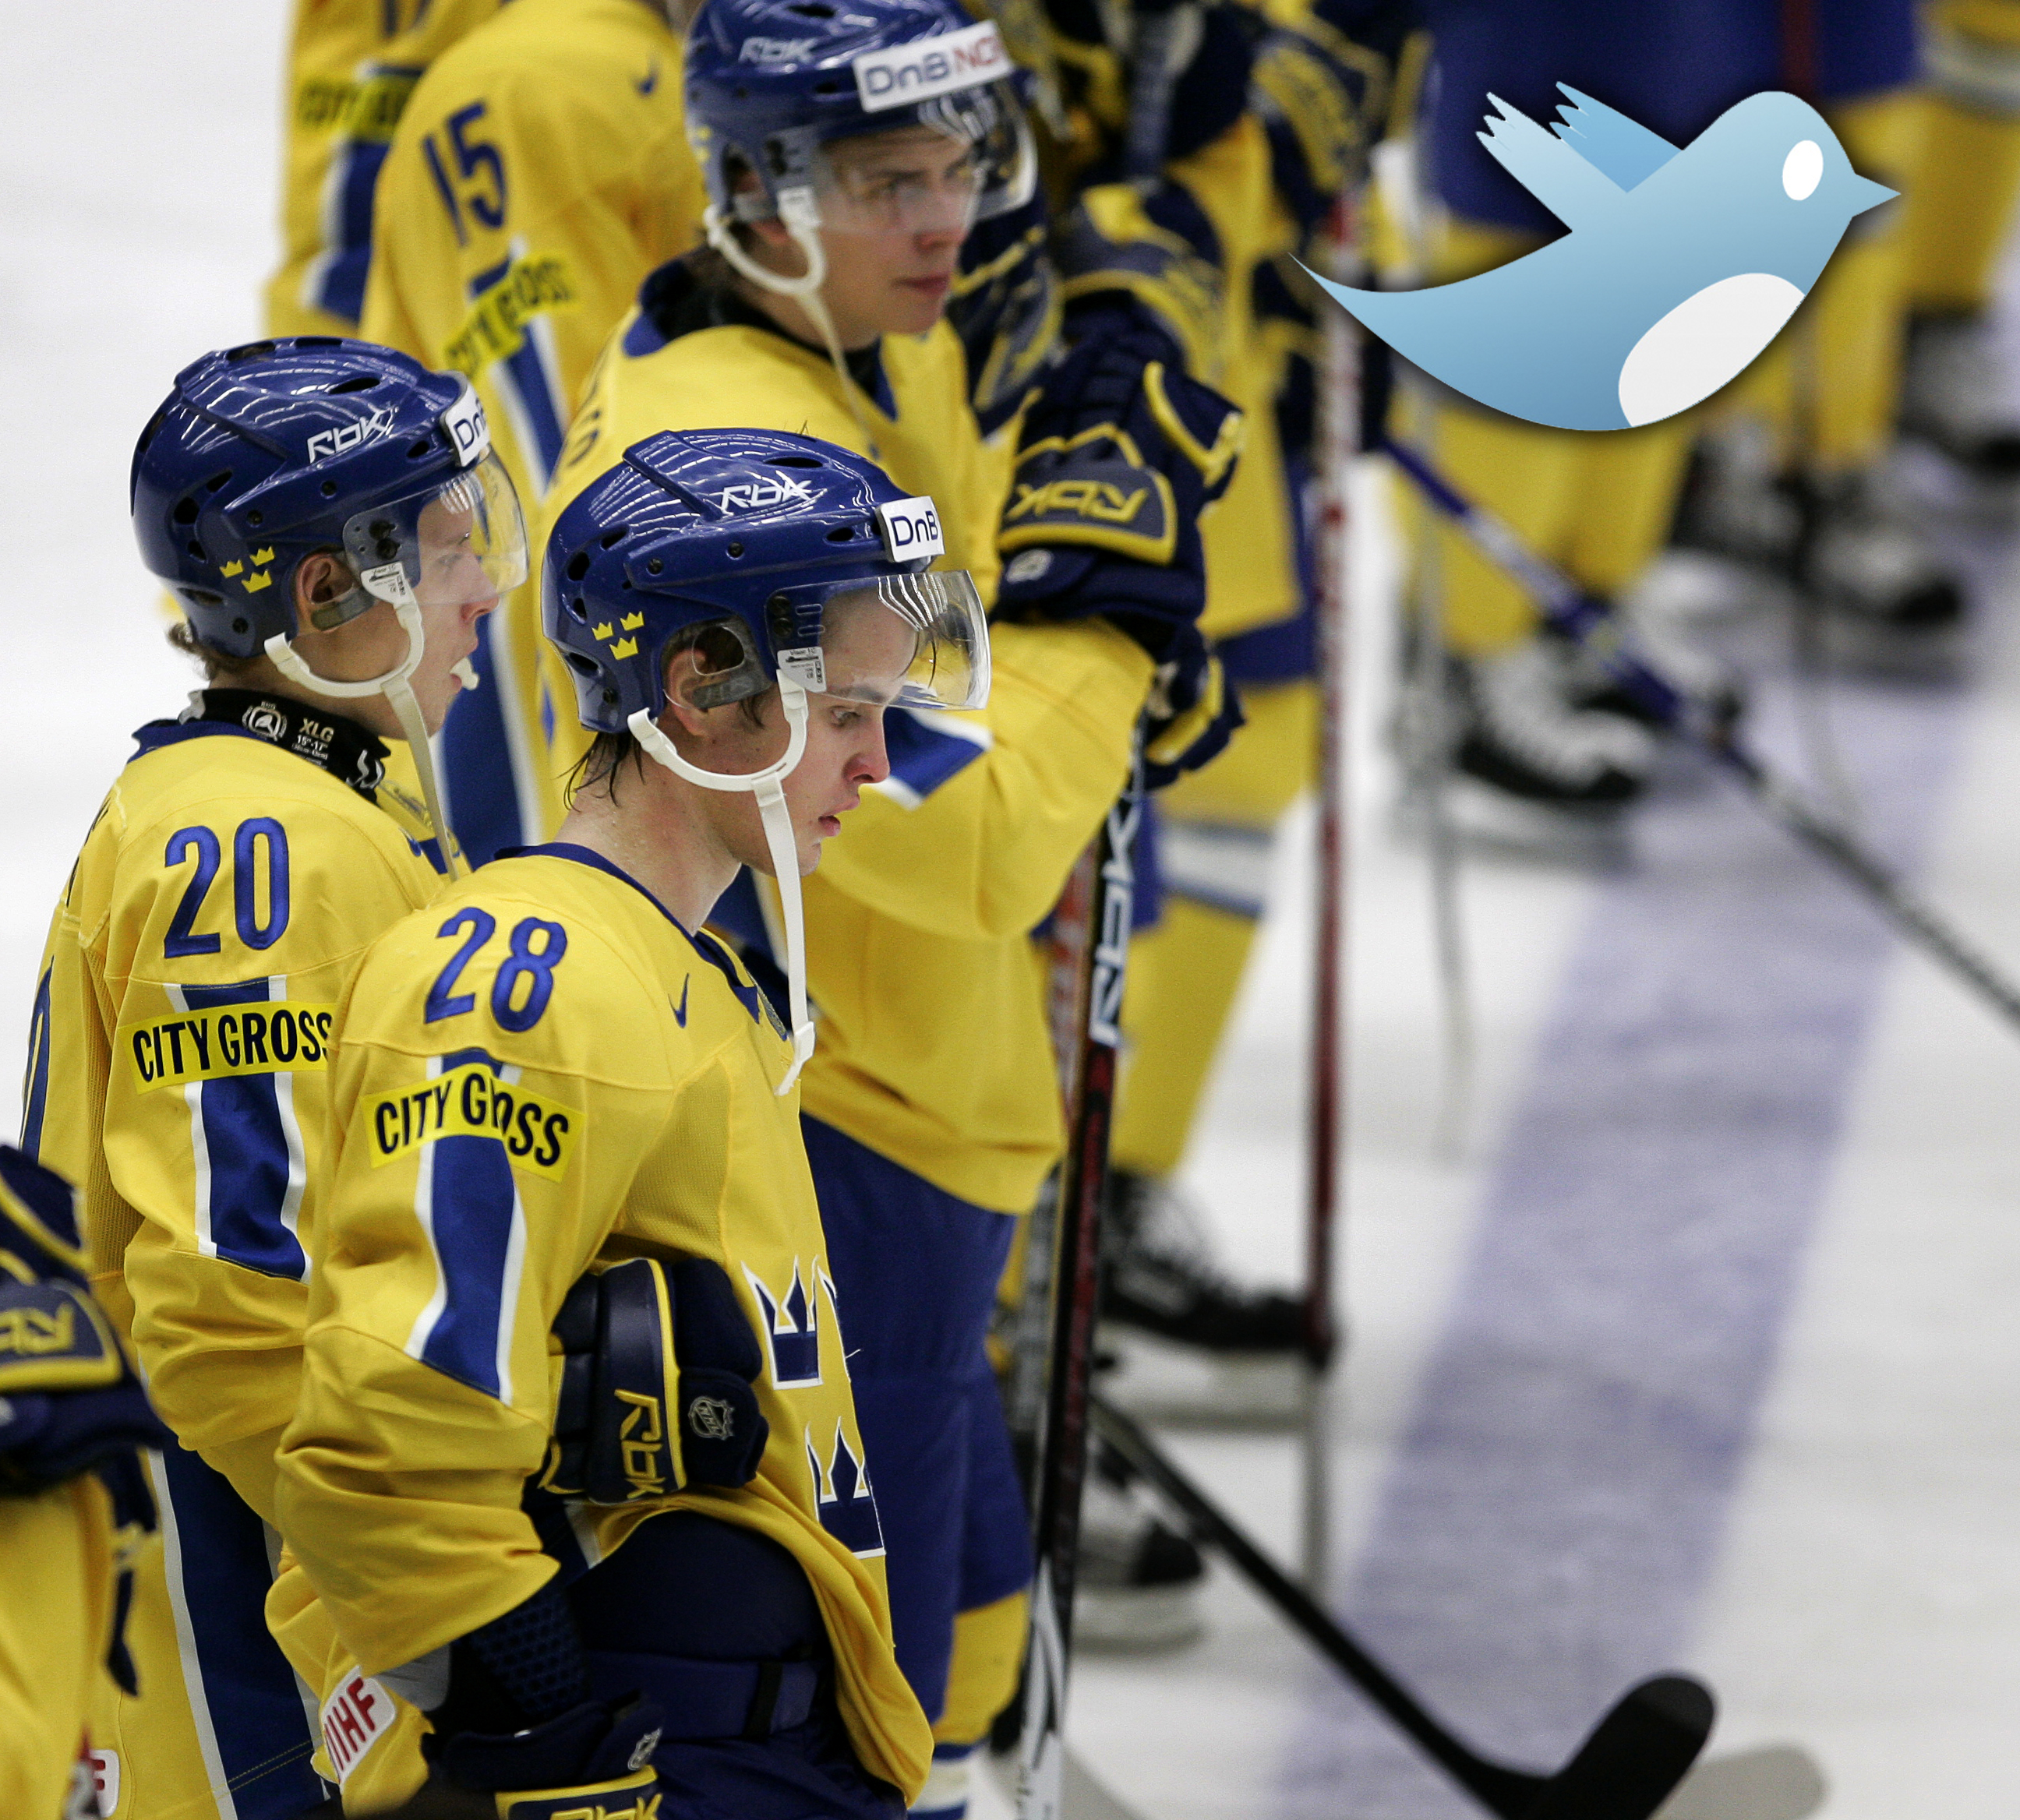 JVM, Twitter, Kanada, Tre Kronor, ishockey, Smakronorna, Roger Ronnberg